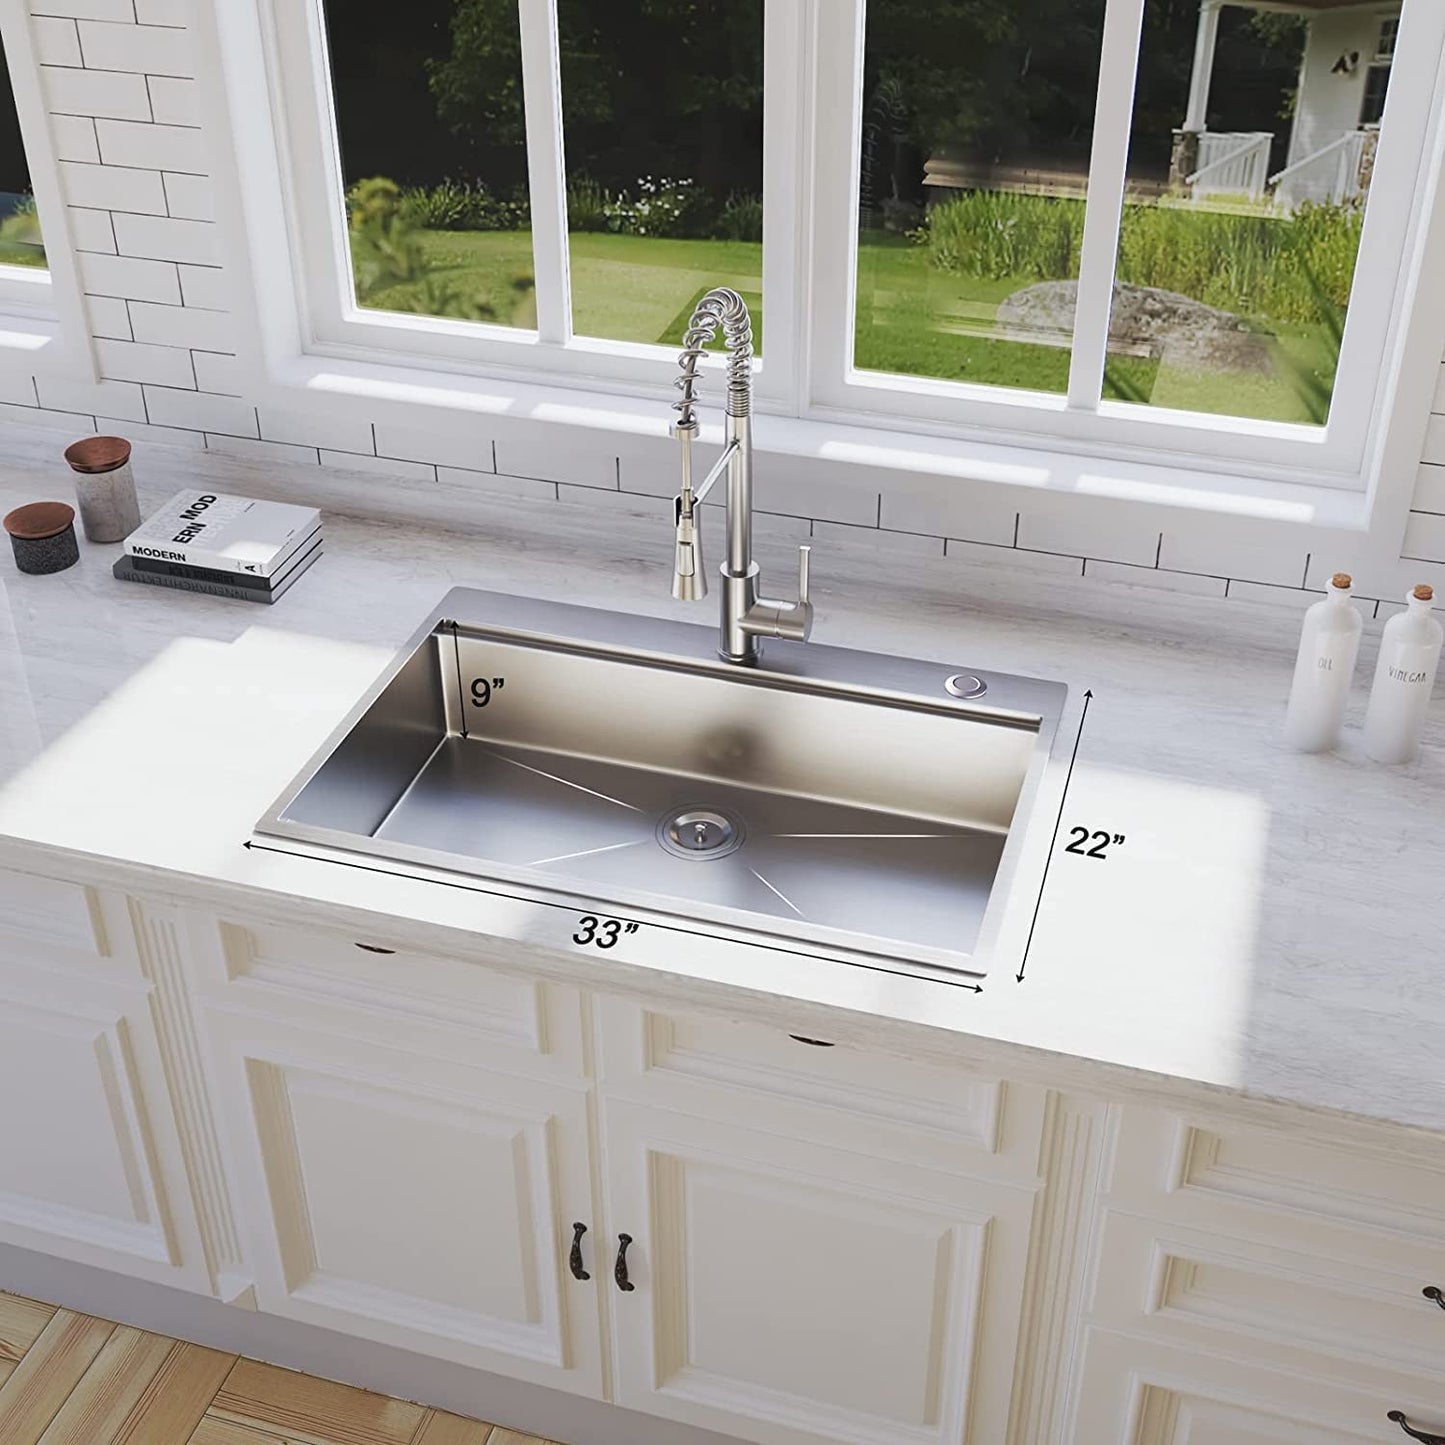 33 inch Drop-in Kitchen Sink, Handmade Drop In Workstation Sink Topmount Kitchen Sink Stainless Steel 18 Gauge Modern Single Bowl Kitchen Sink with Ledge and Accessories ( Pack of 5 )